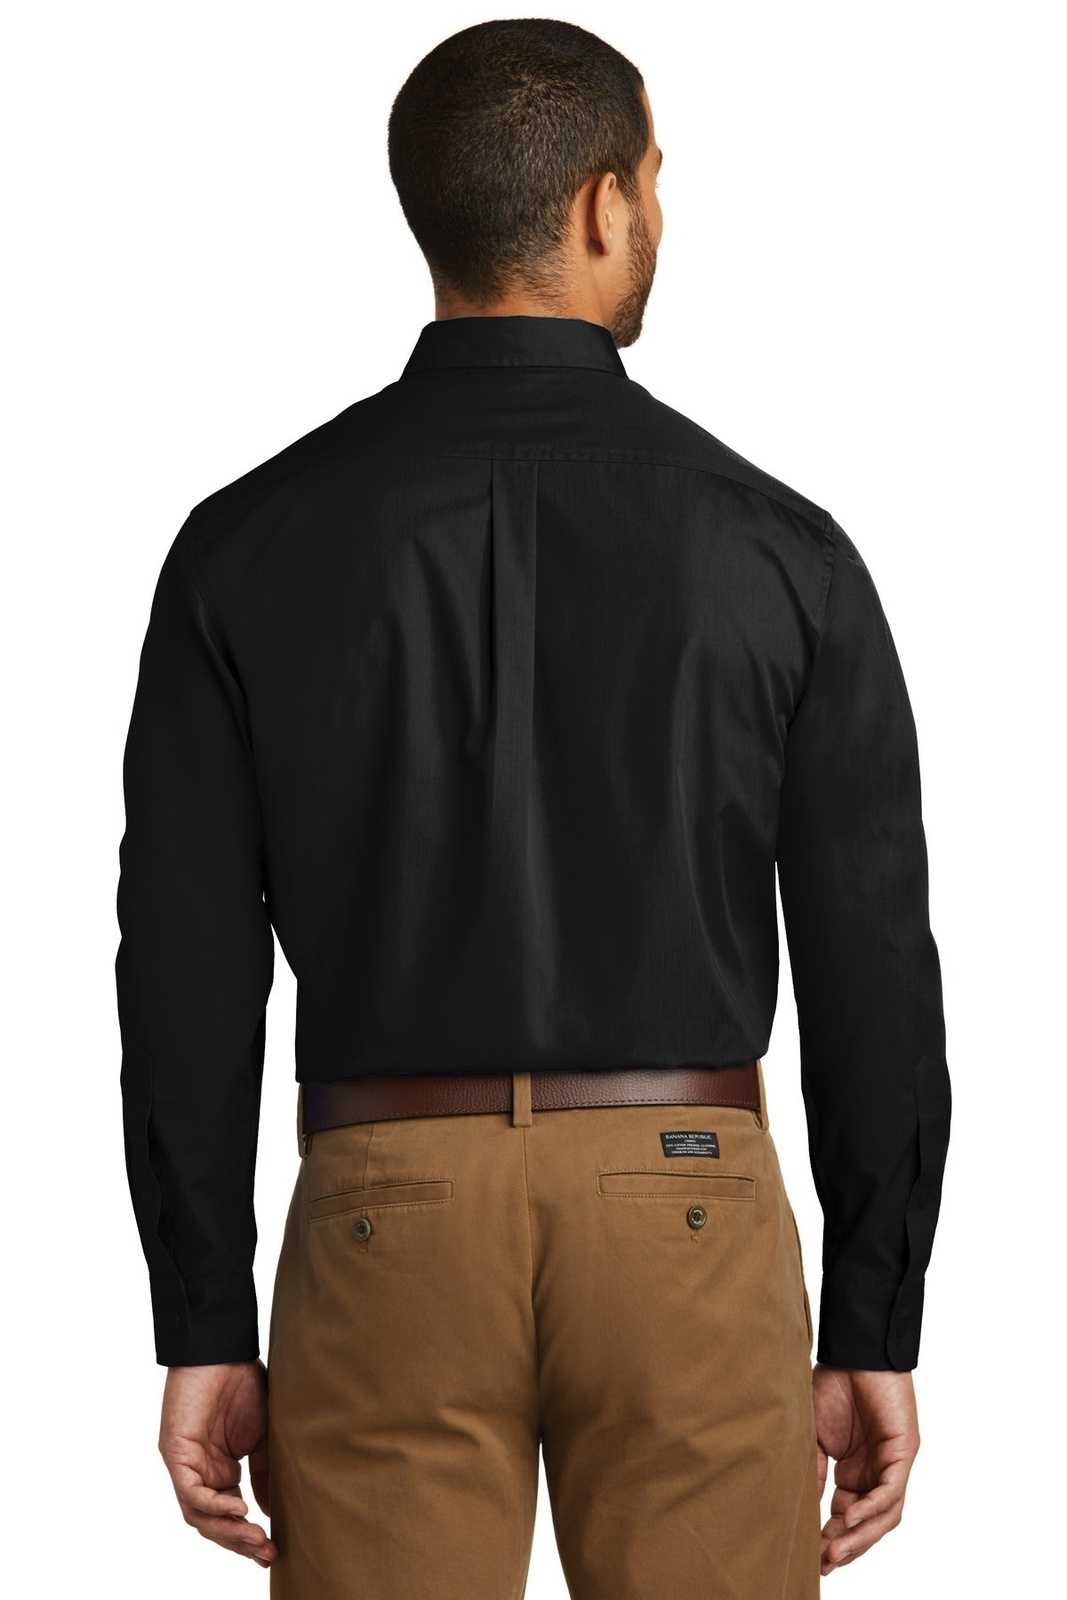 Port Authority W100 Long Sleeve Carefree Poplin Shirt - Deep Black - HIT a Double - 1